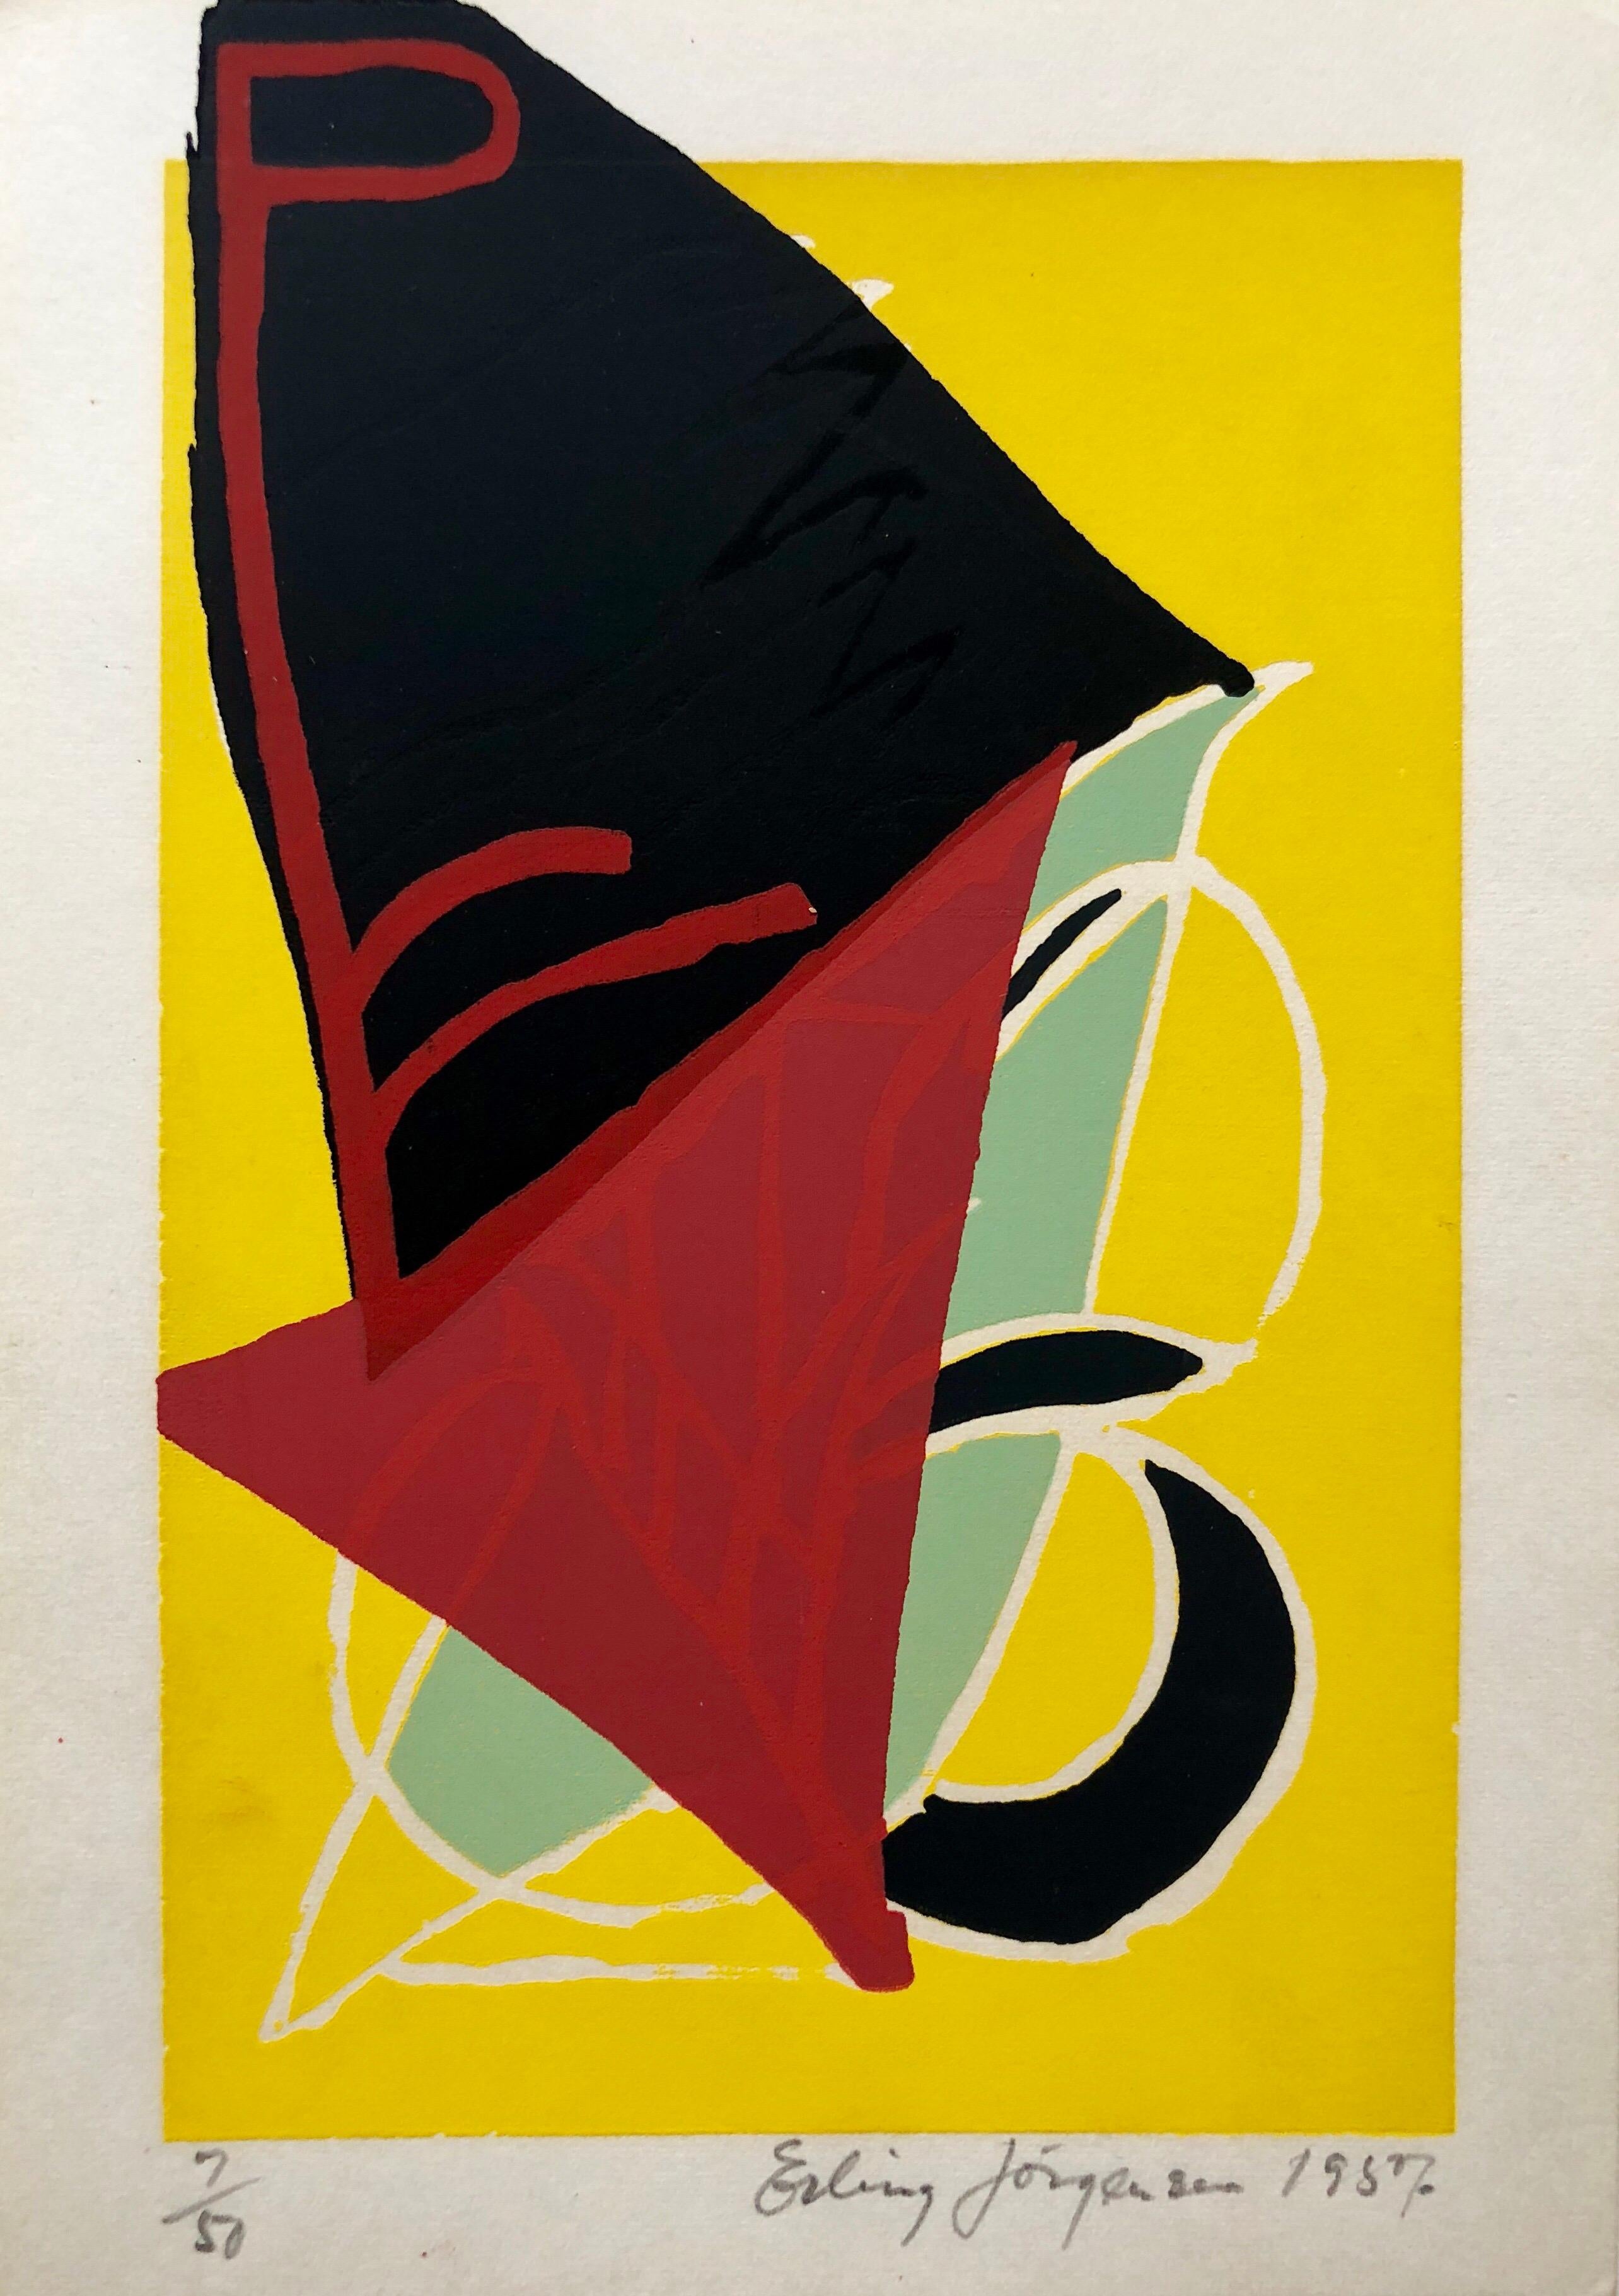 Erling Jorgensen Still-Life Print - Cobra Artist 1950s Silkscreen Serigraph Bright Colorful Abstract Hand Signed